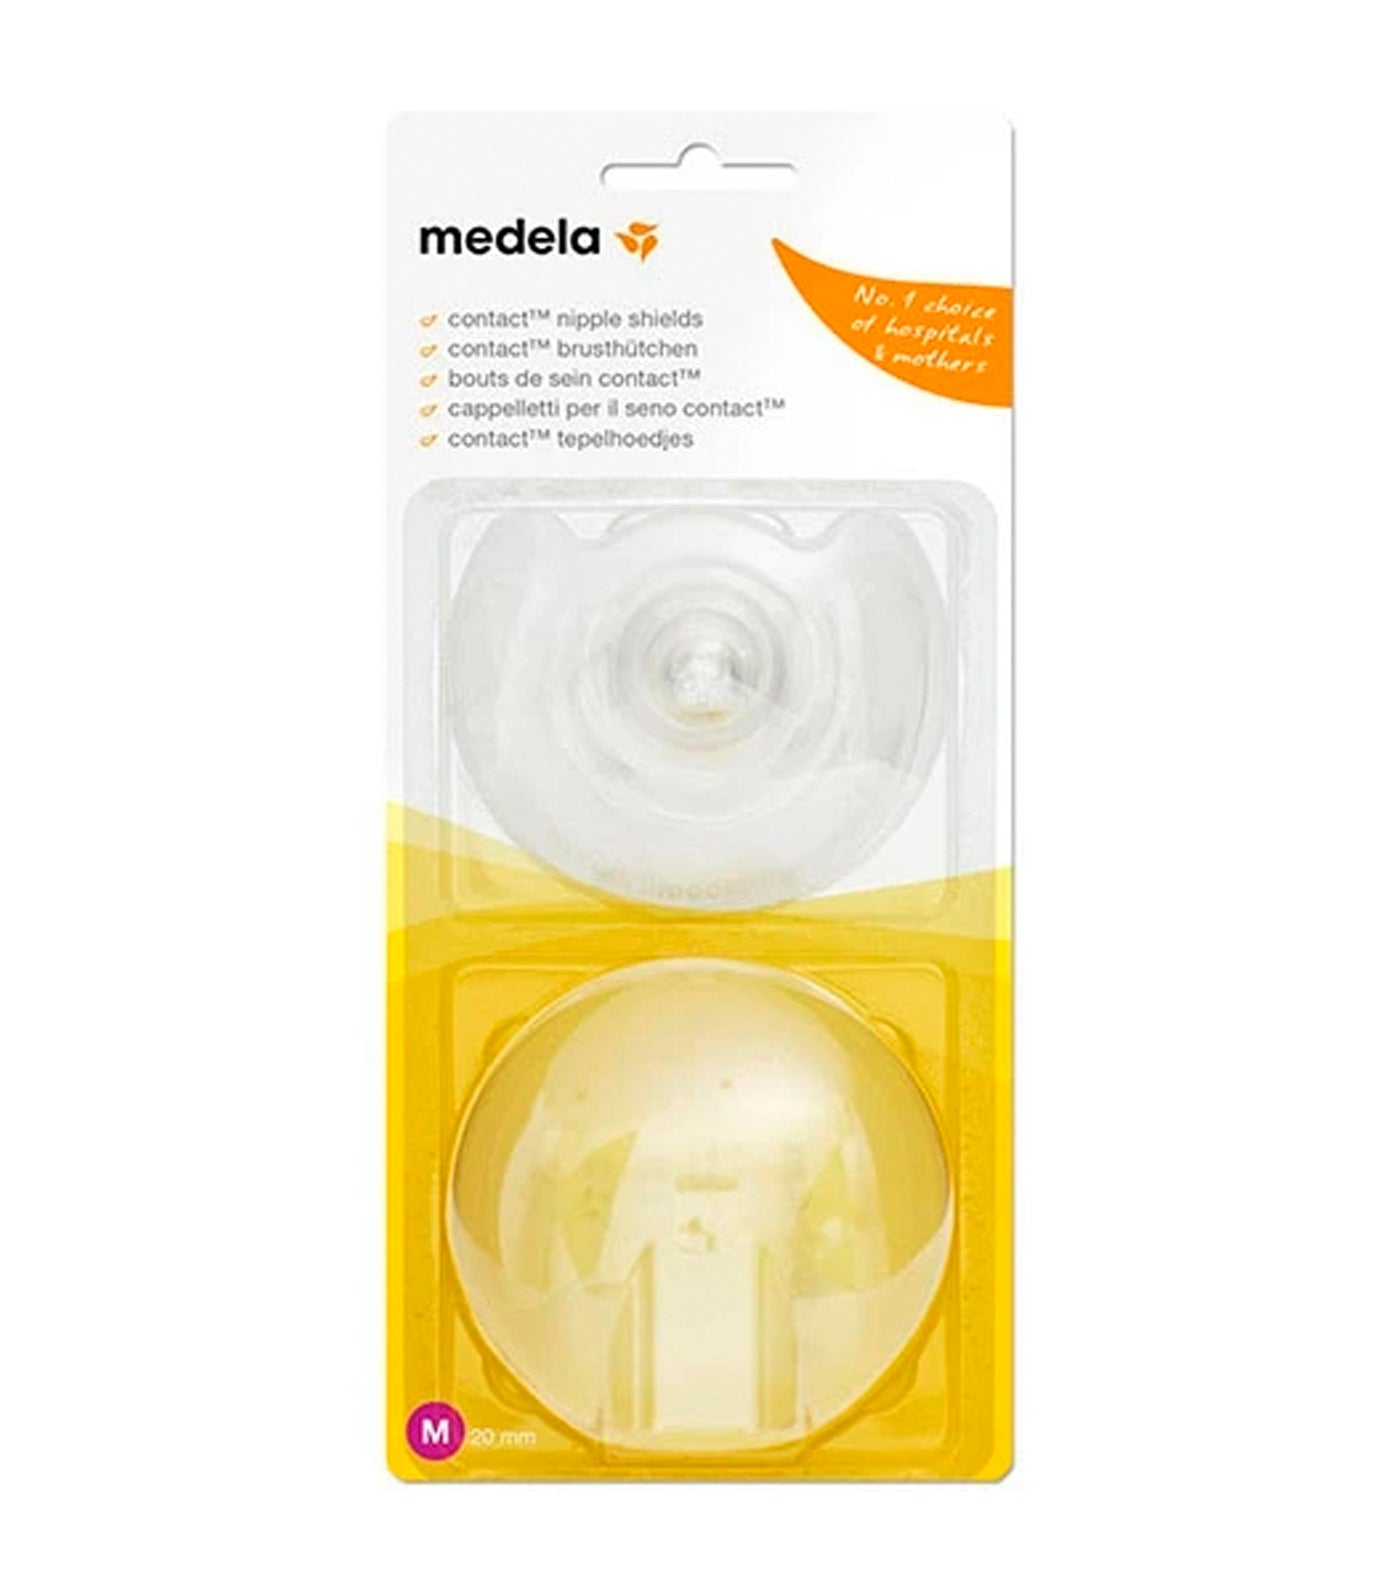 medela contact nipple shields (medium)